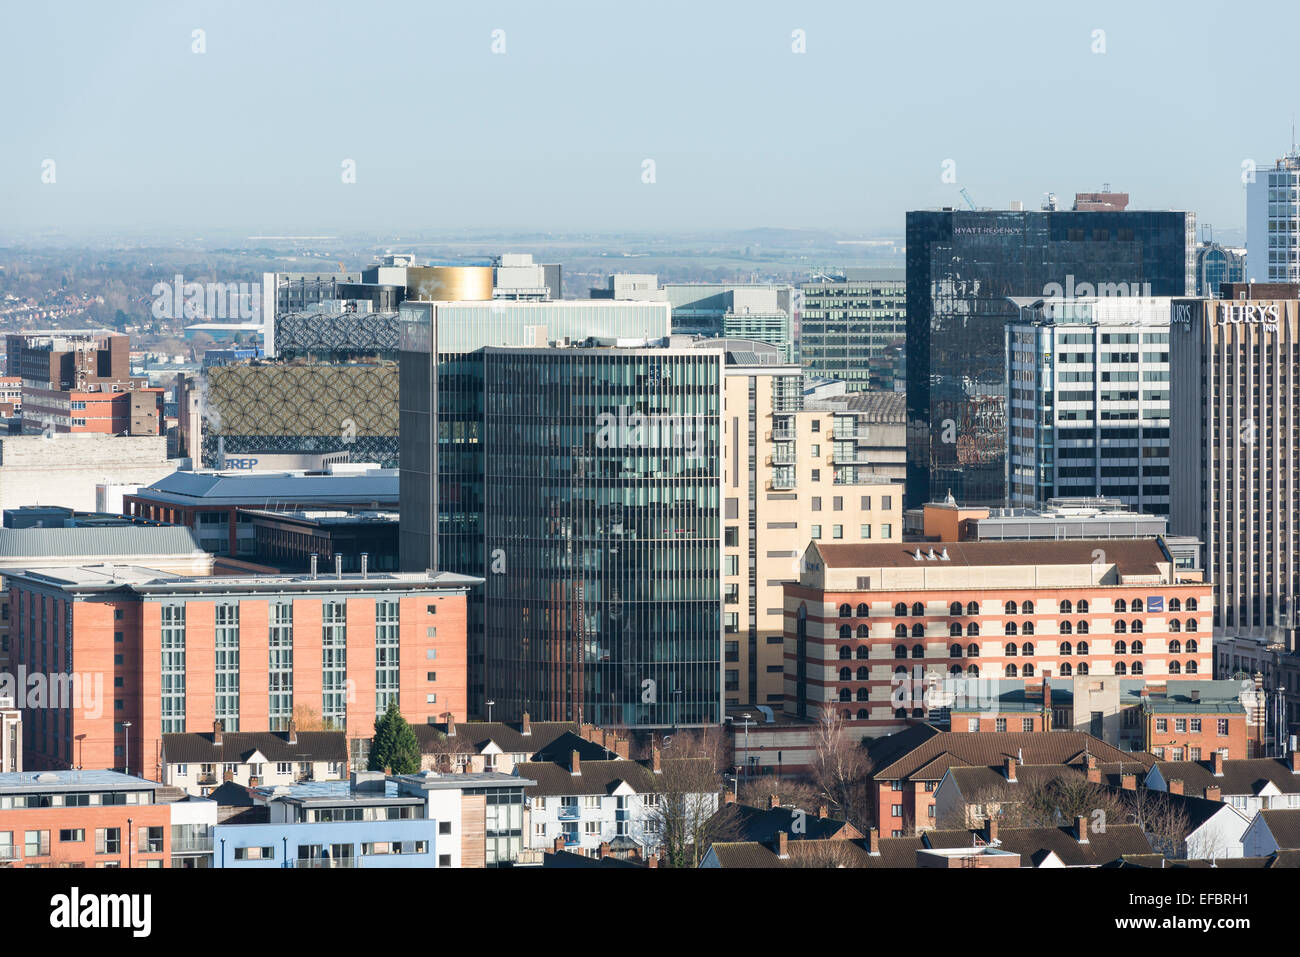 Les immeubles de bureaux à Birmingham, vus de l'Hagley Road. Banque D'Images